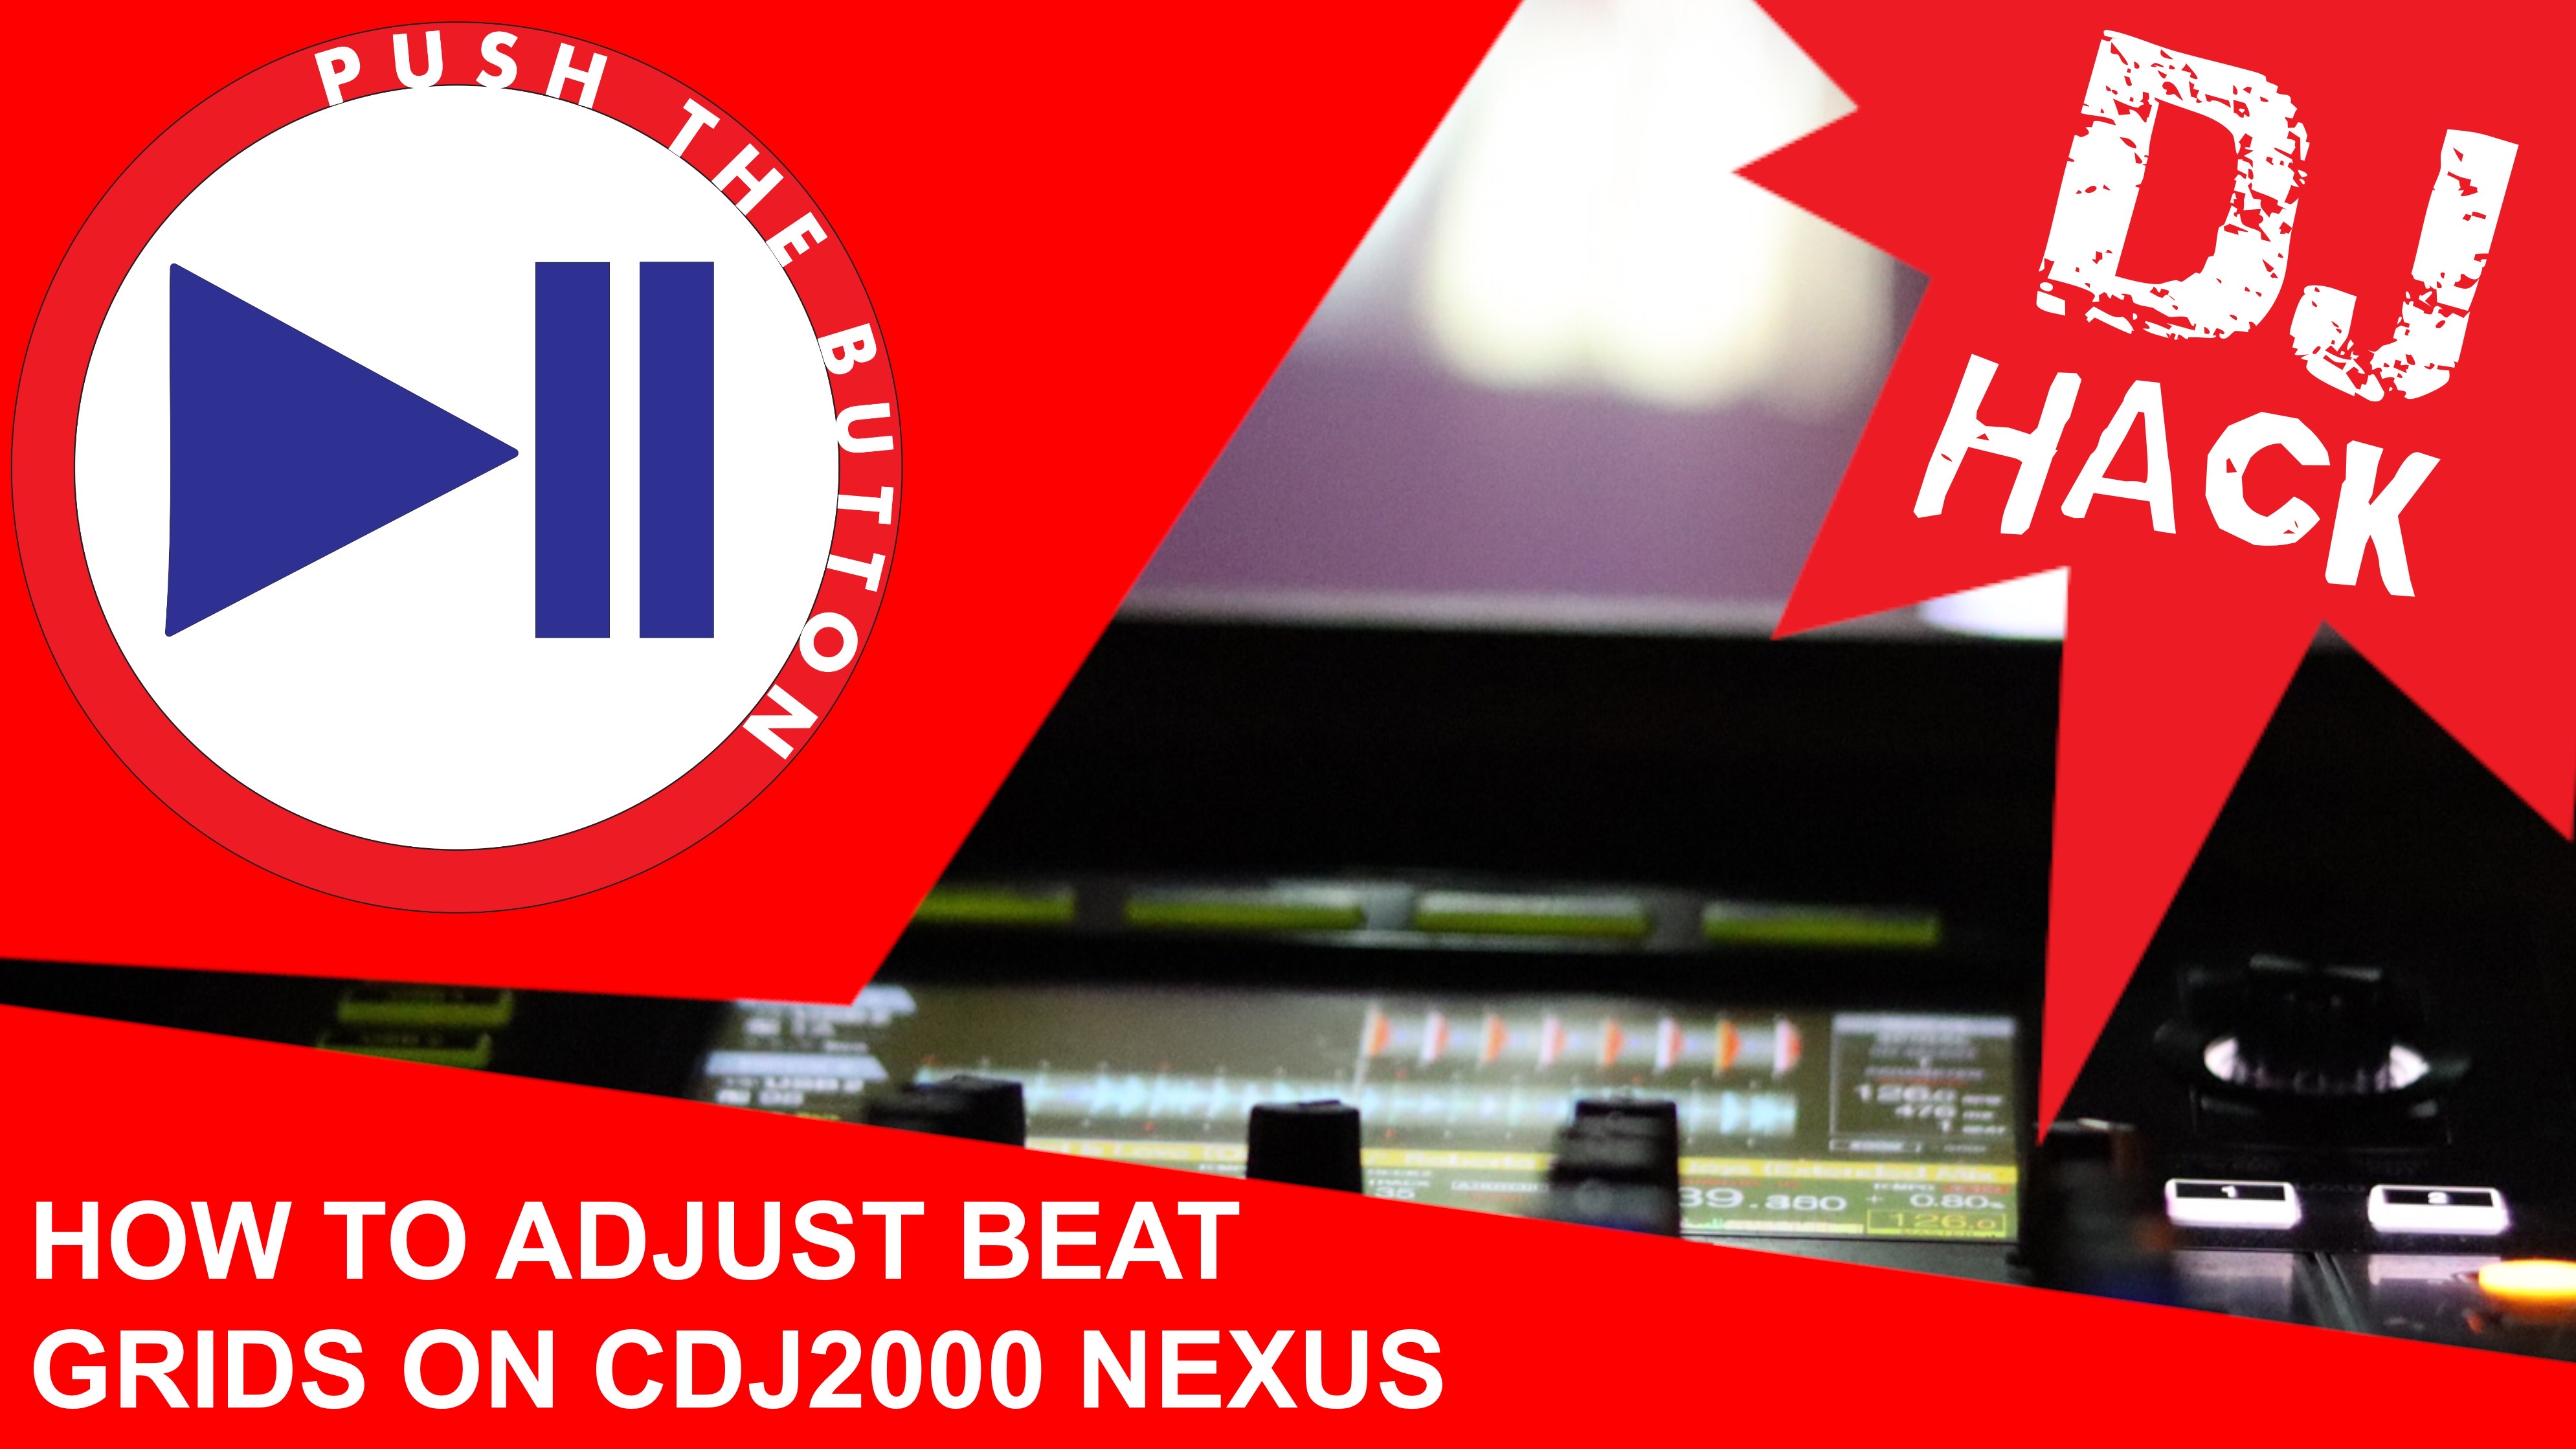 Adjust beat grids on the fly with CDJ 2000 nexus